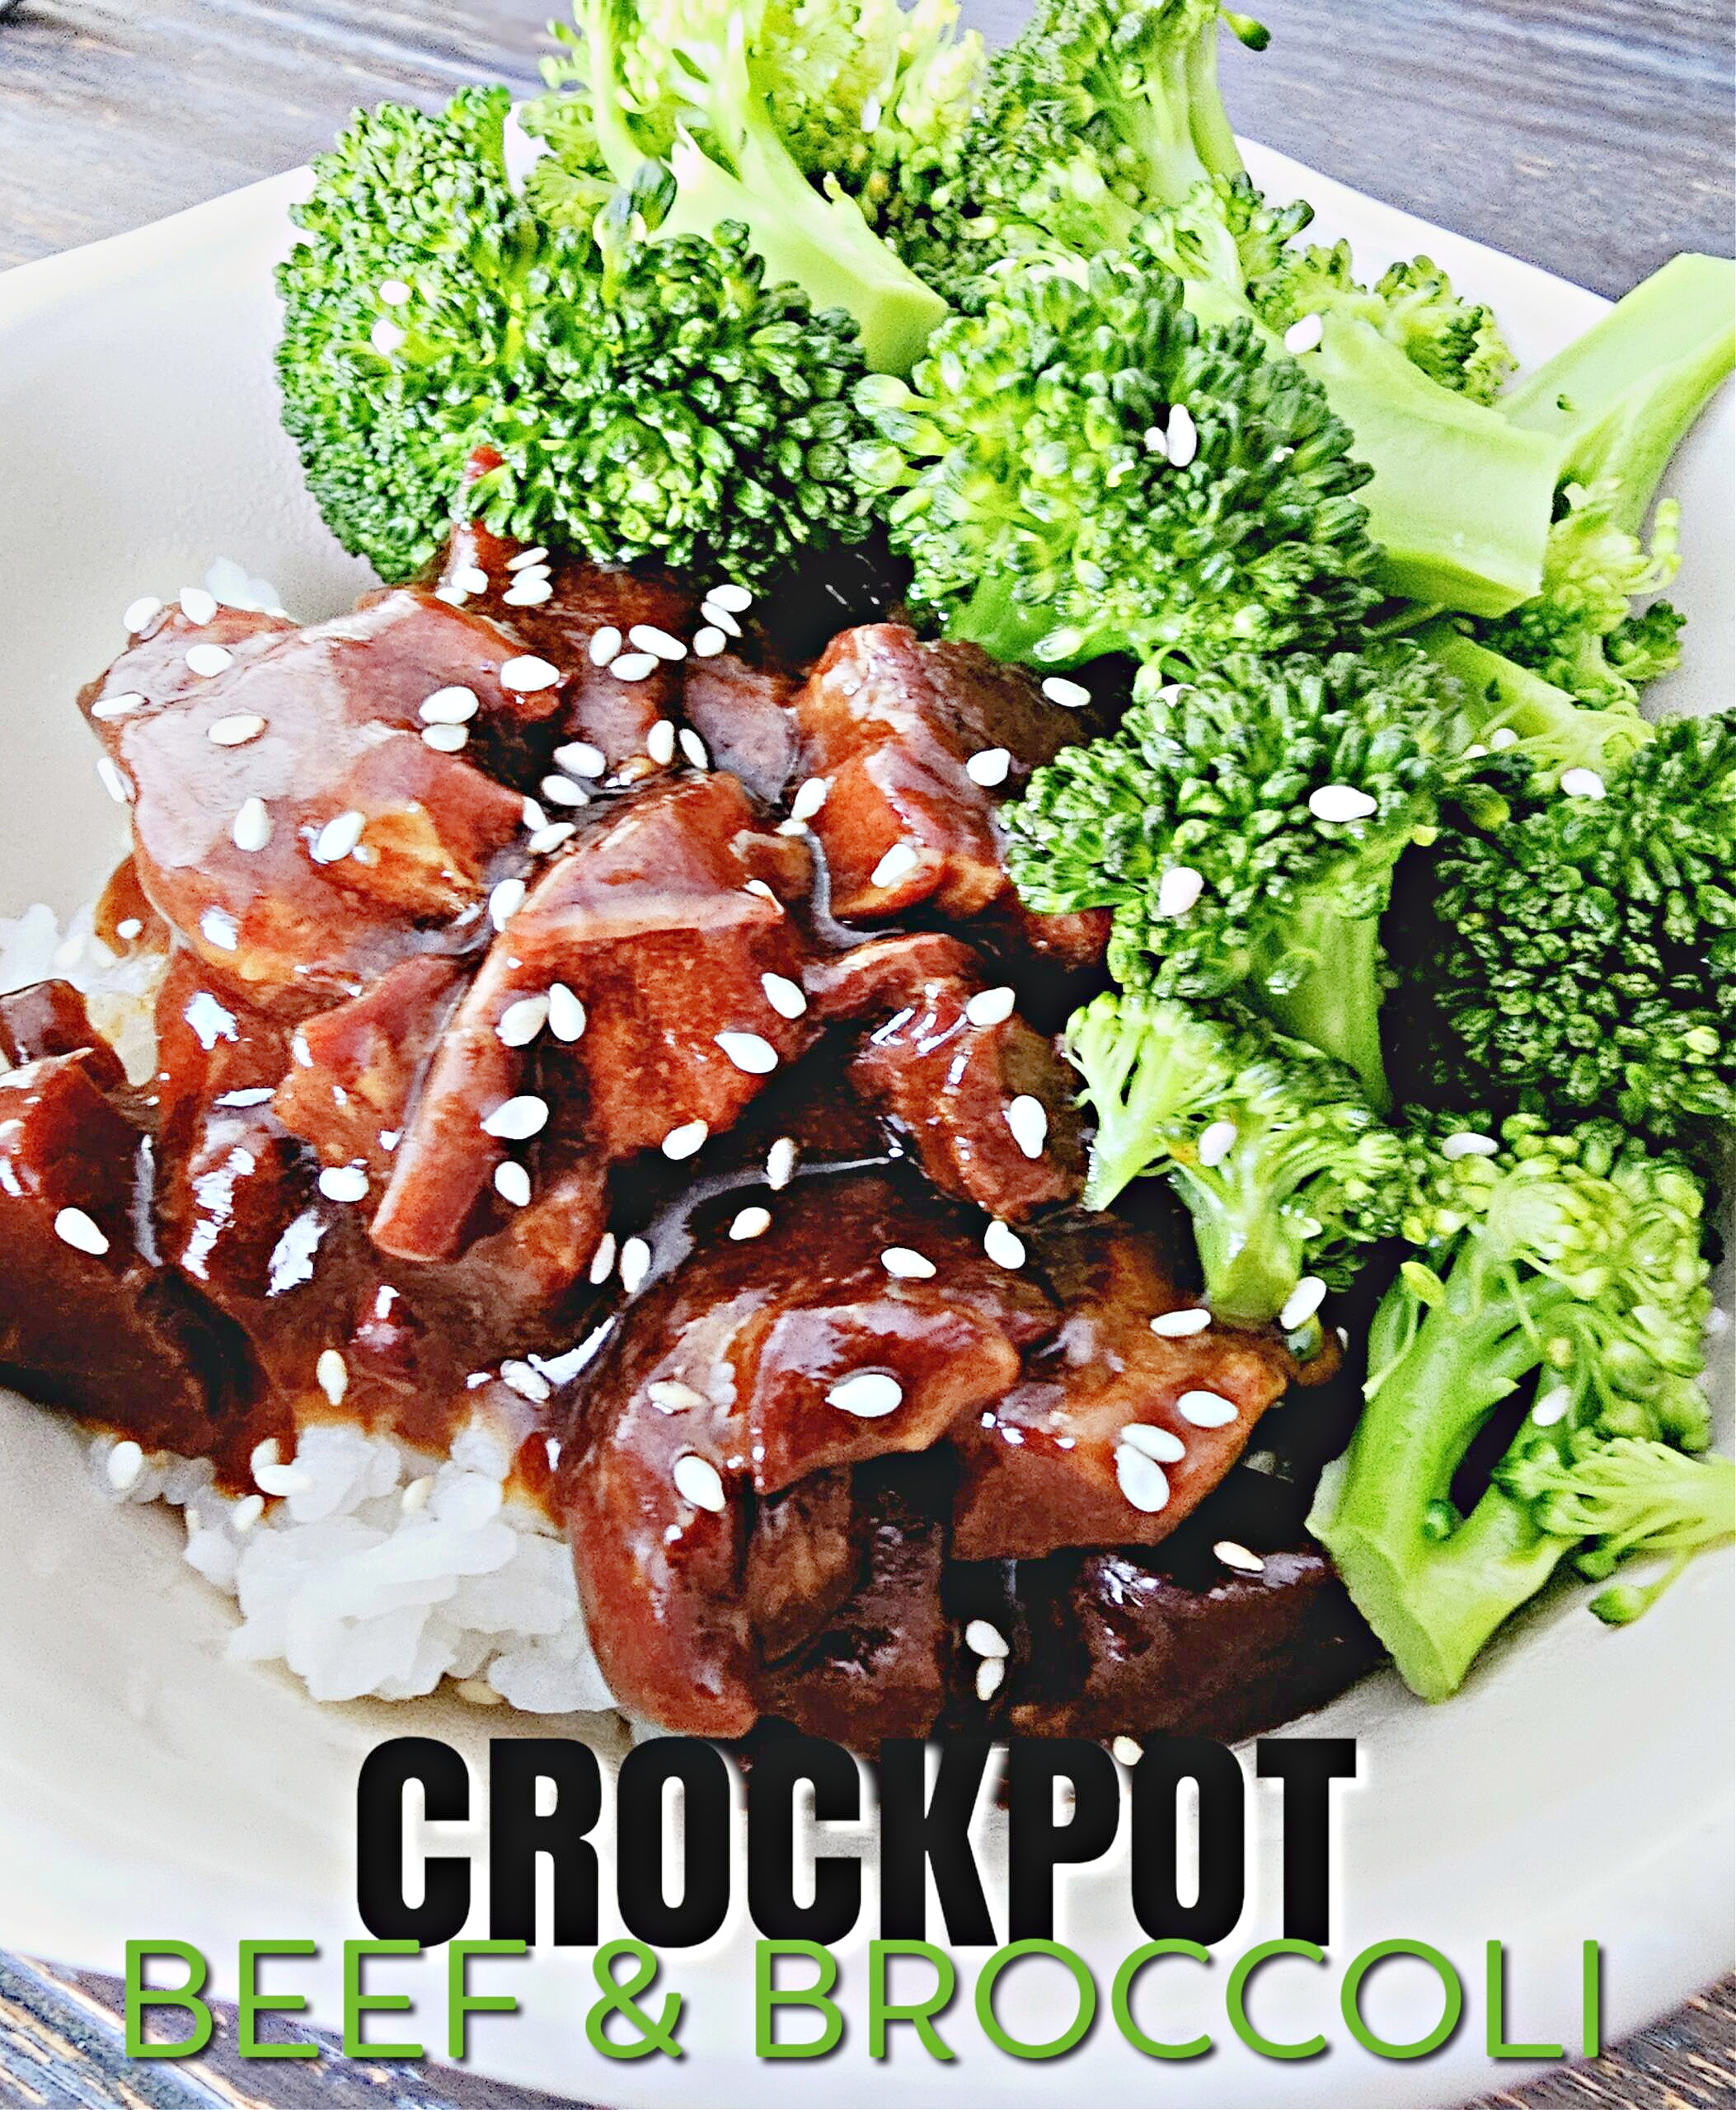 Crockpot Beef and Broccoli #crockpot #slowcooker #beef #broccoli #dinner #familydinner #weeknightdinnerideas